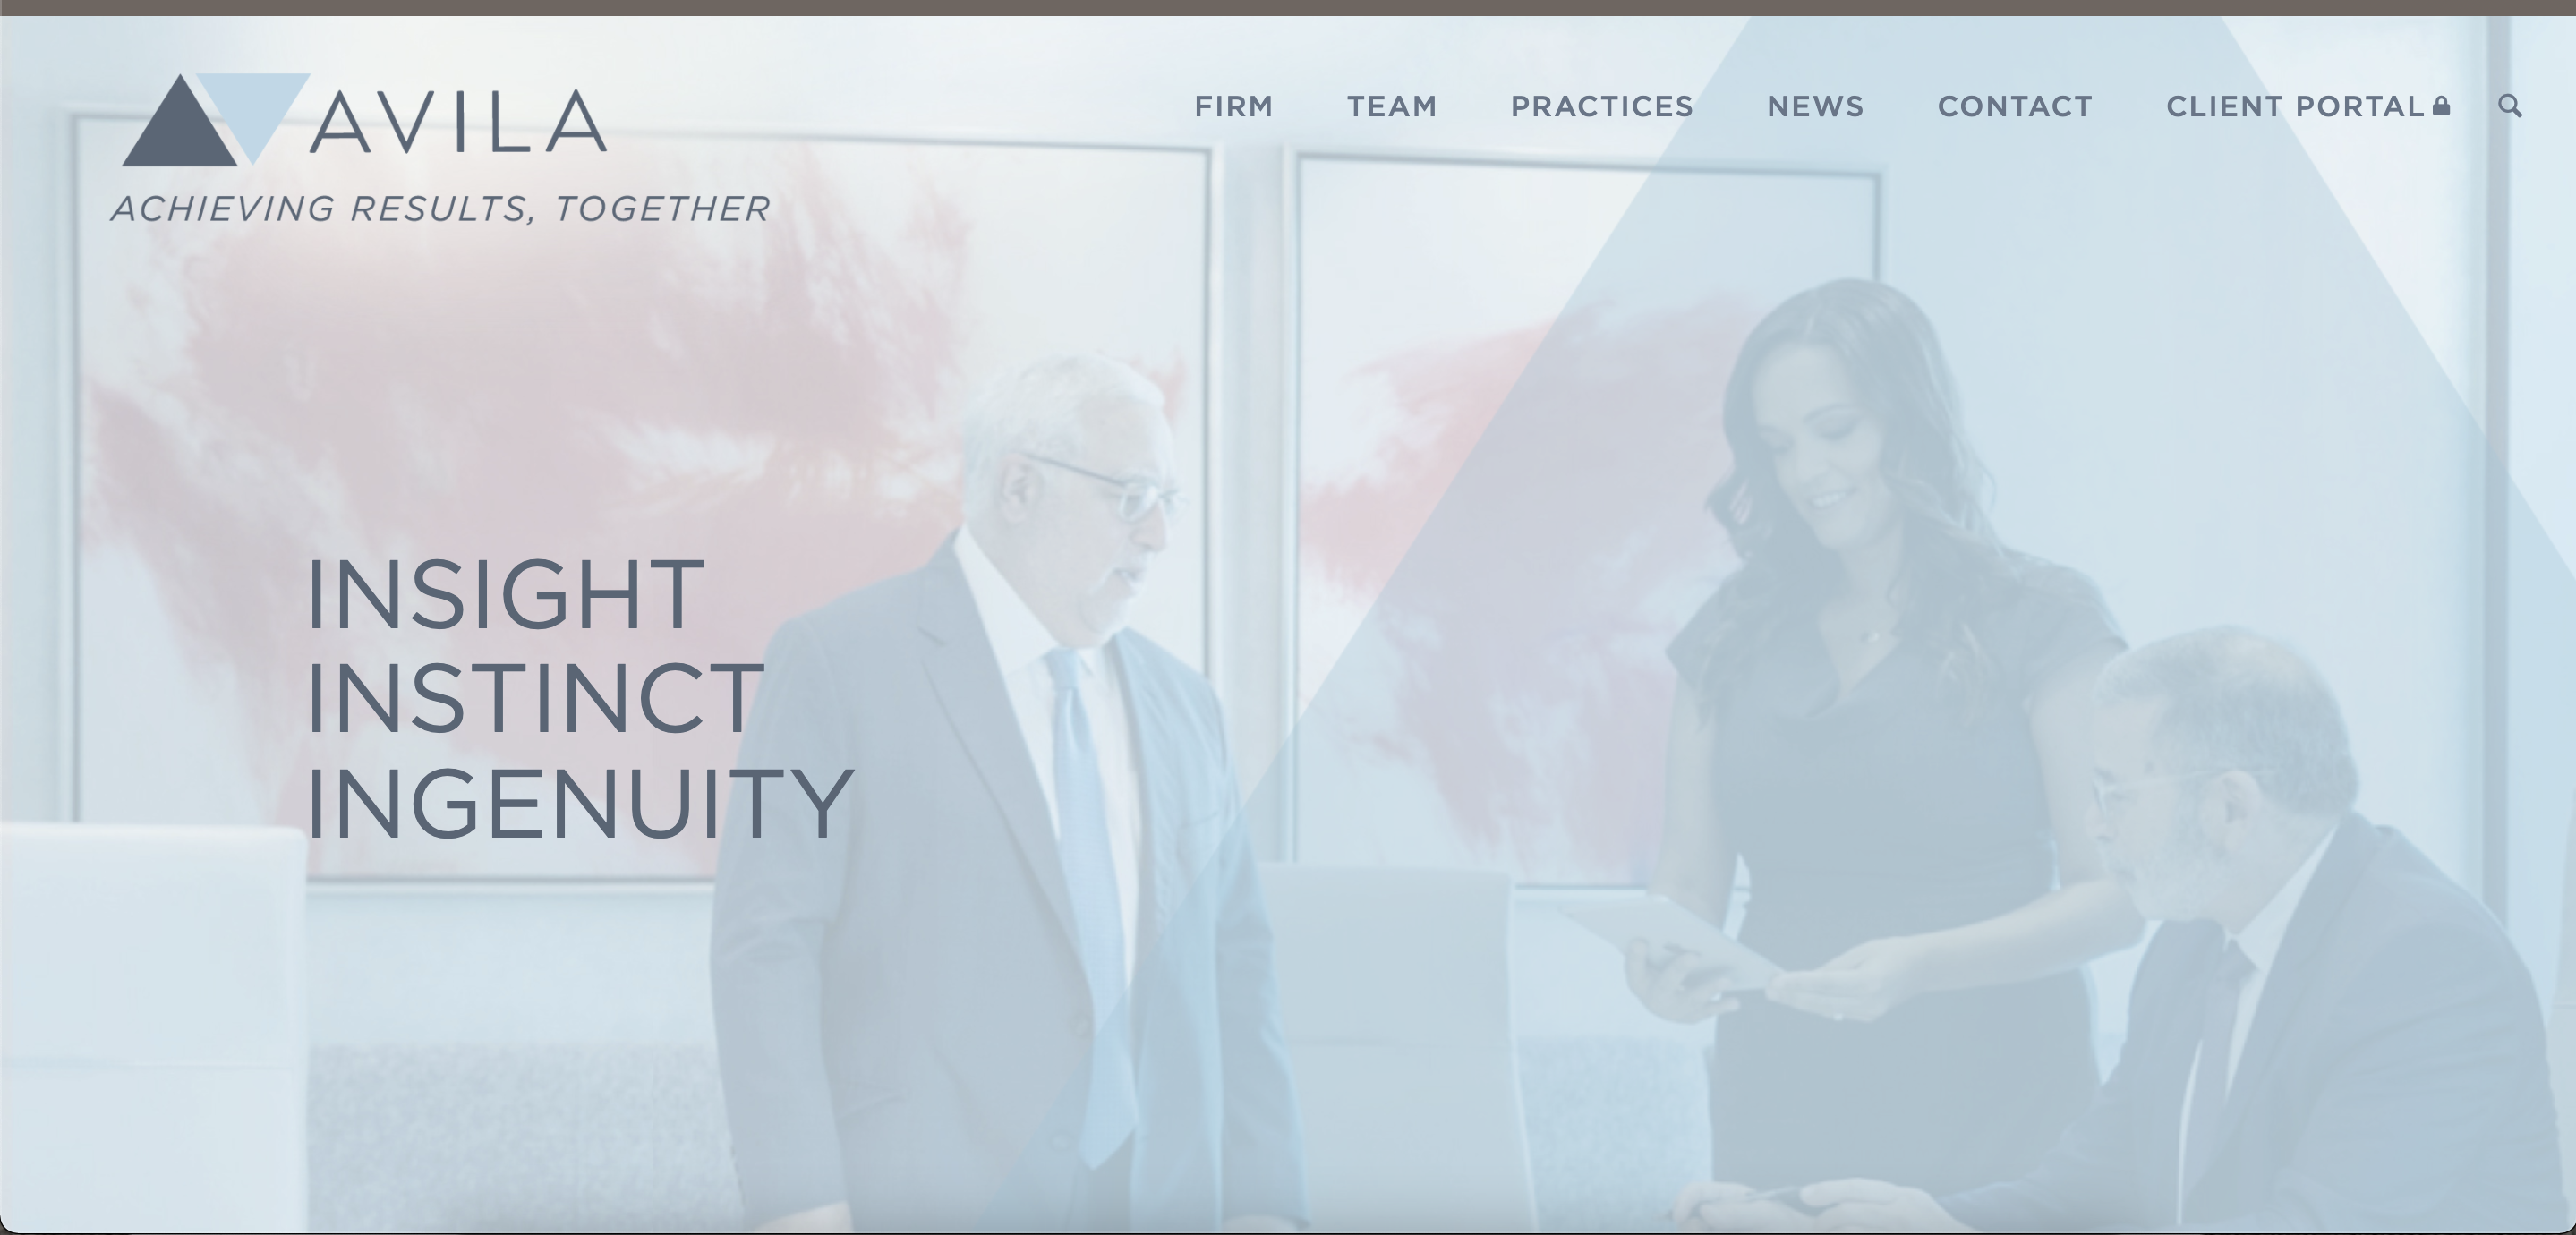 image of three people shown on website homepage with AVILA logo and headline "Insight, Instinct, Ingenuity"